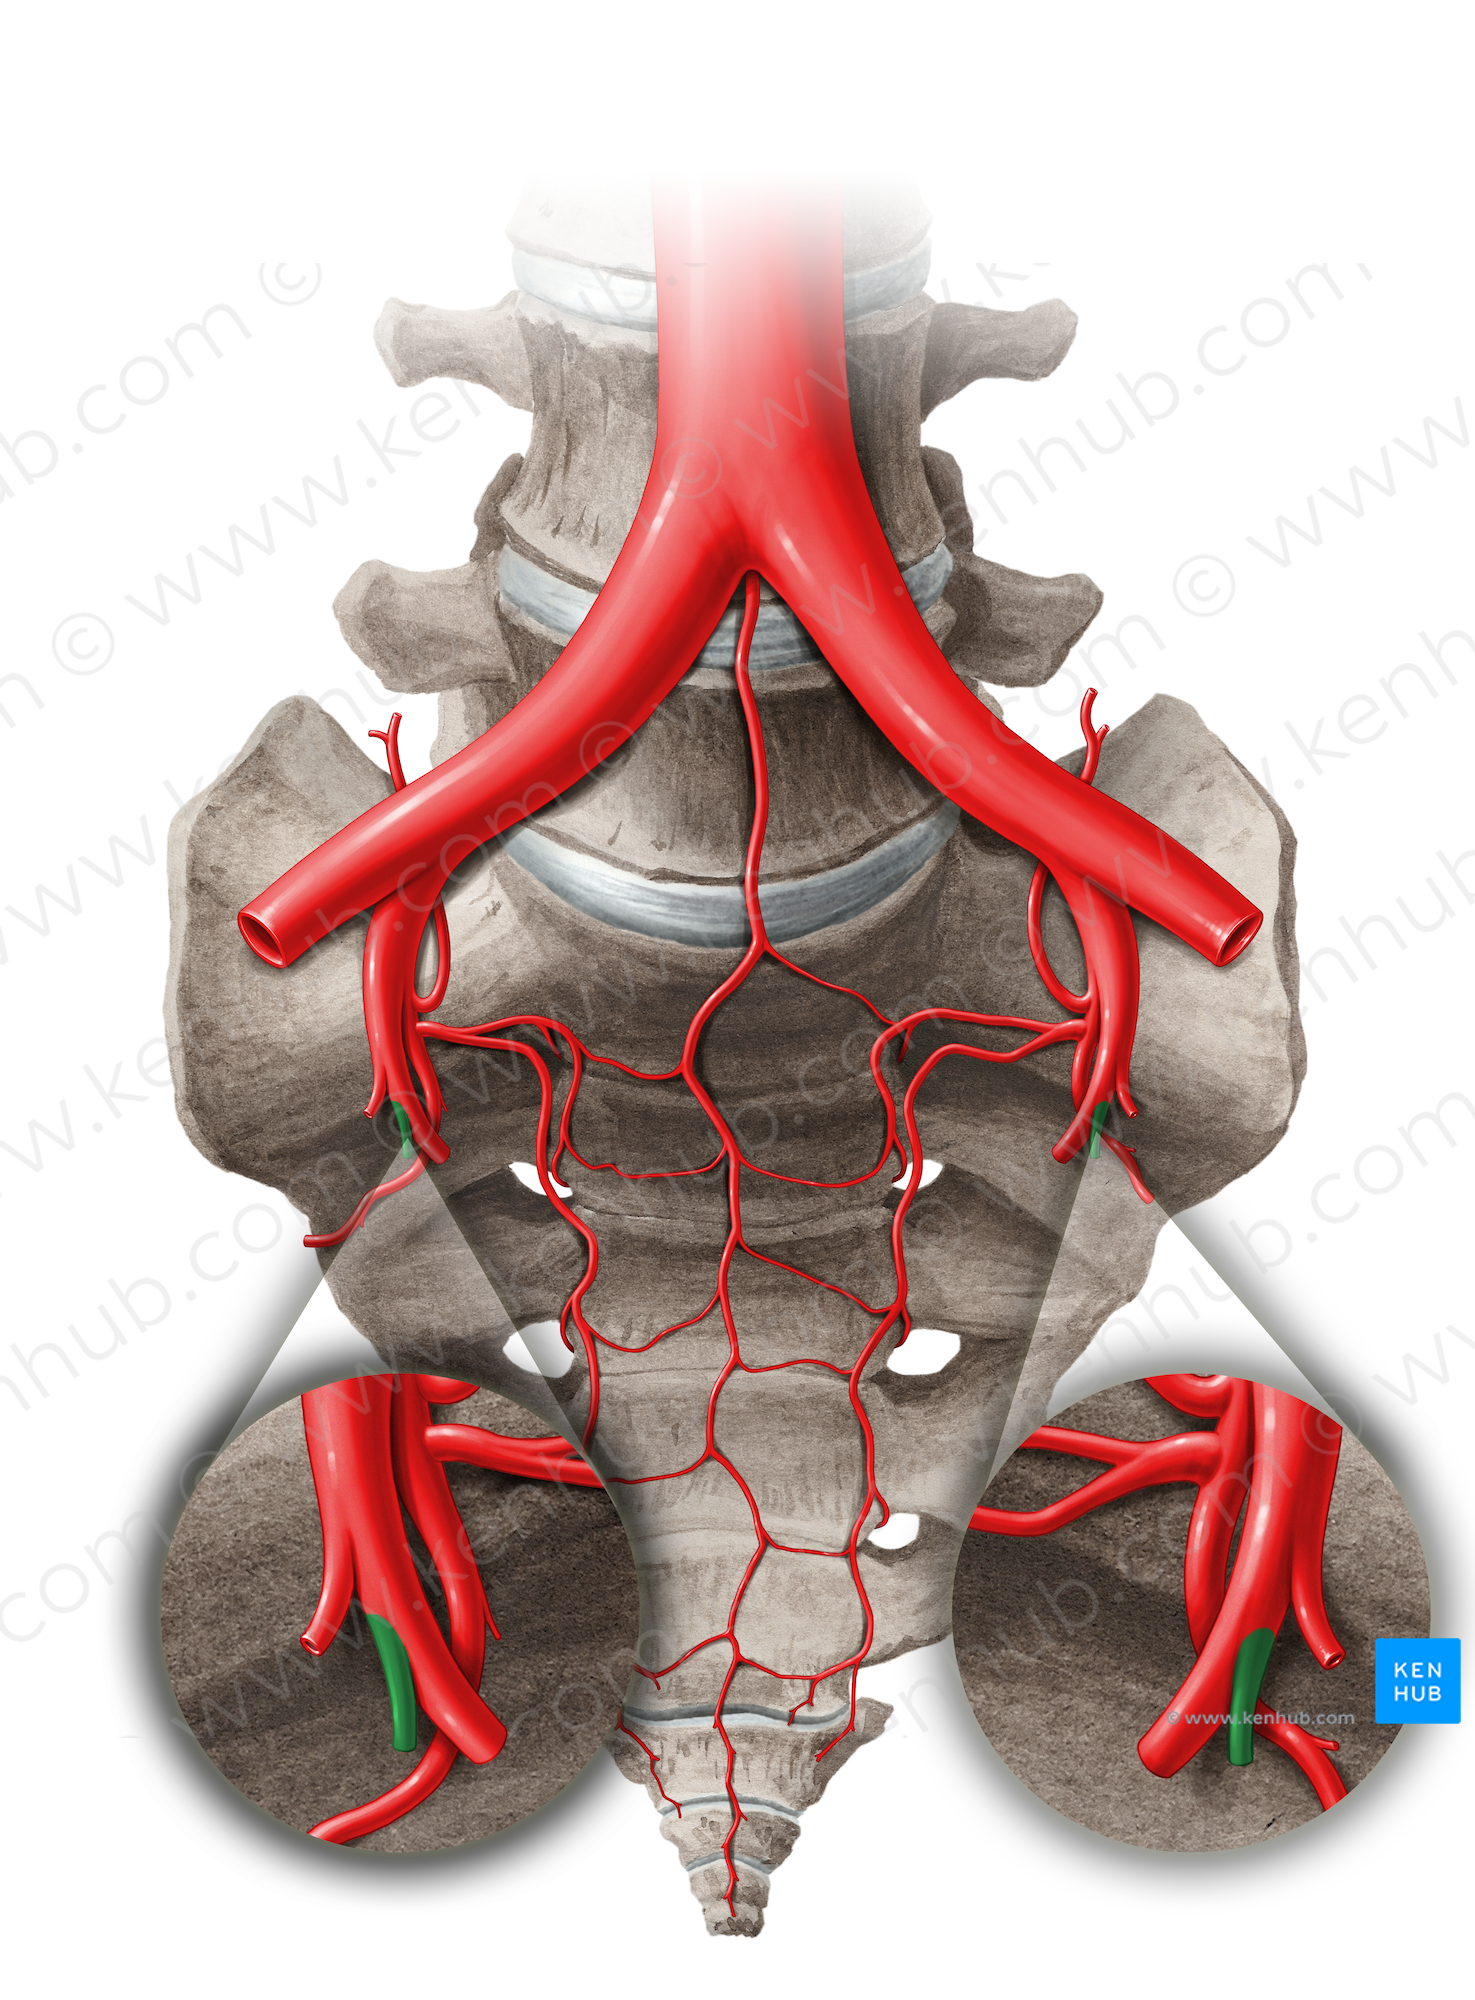 Obturator artery (#14058)